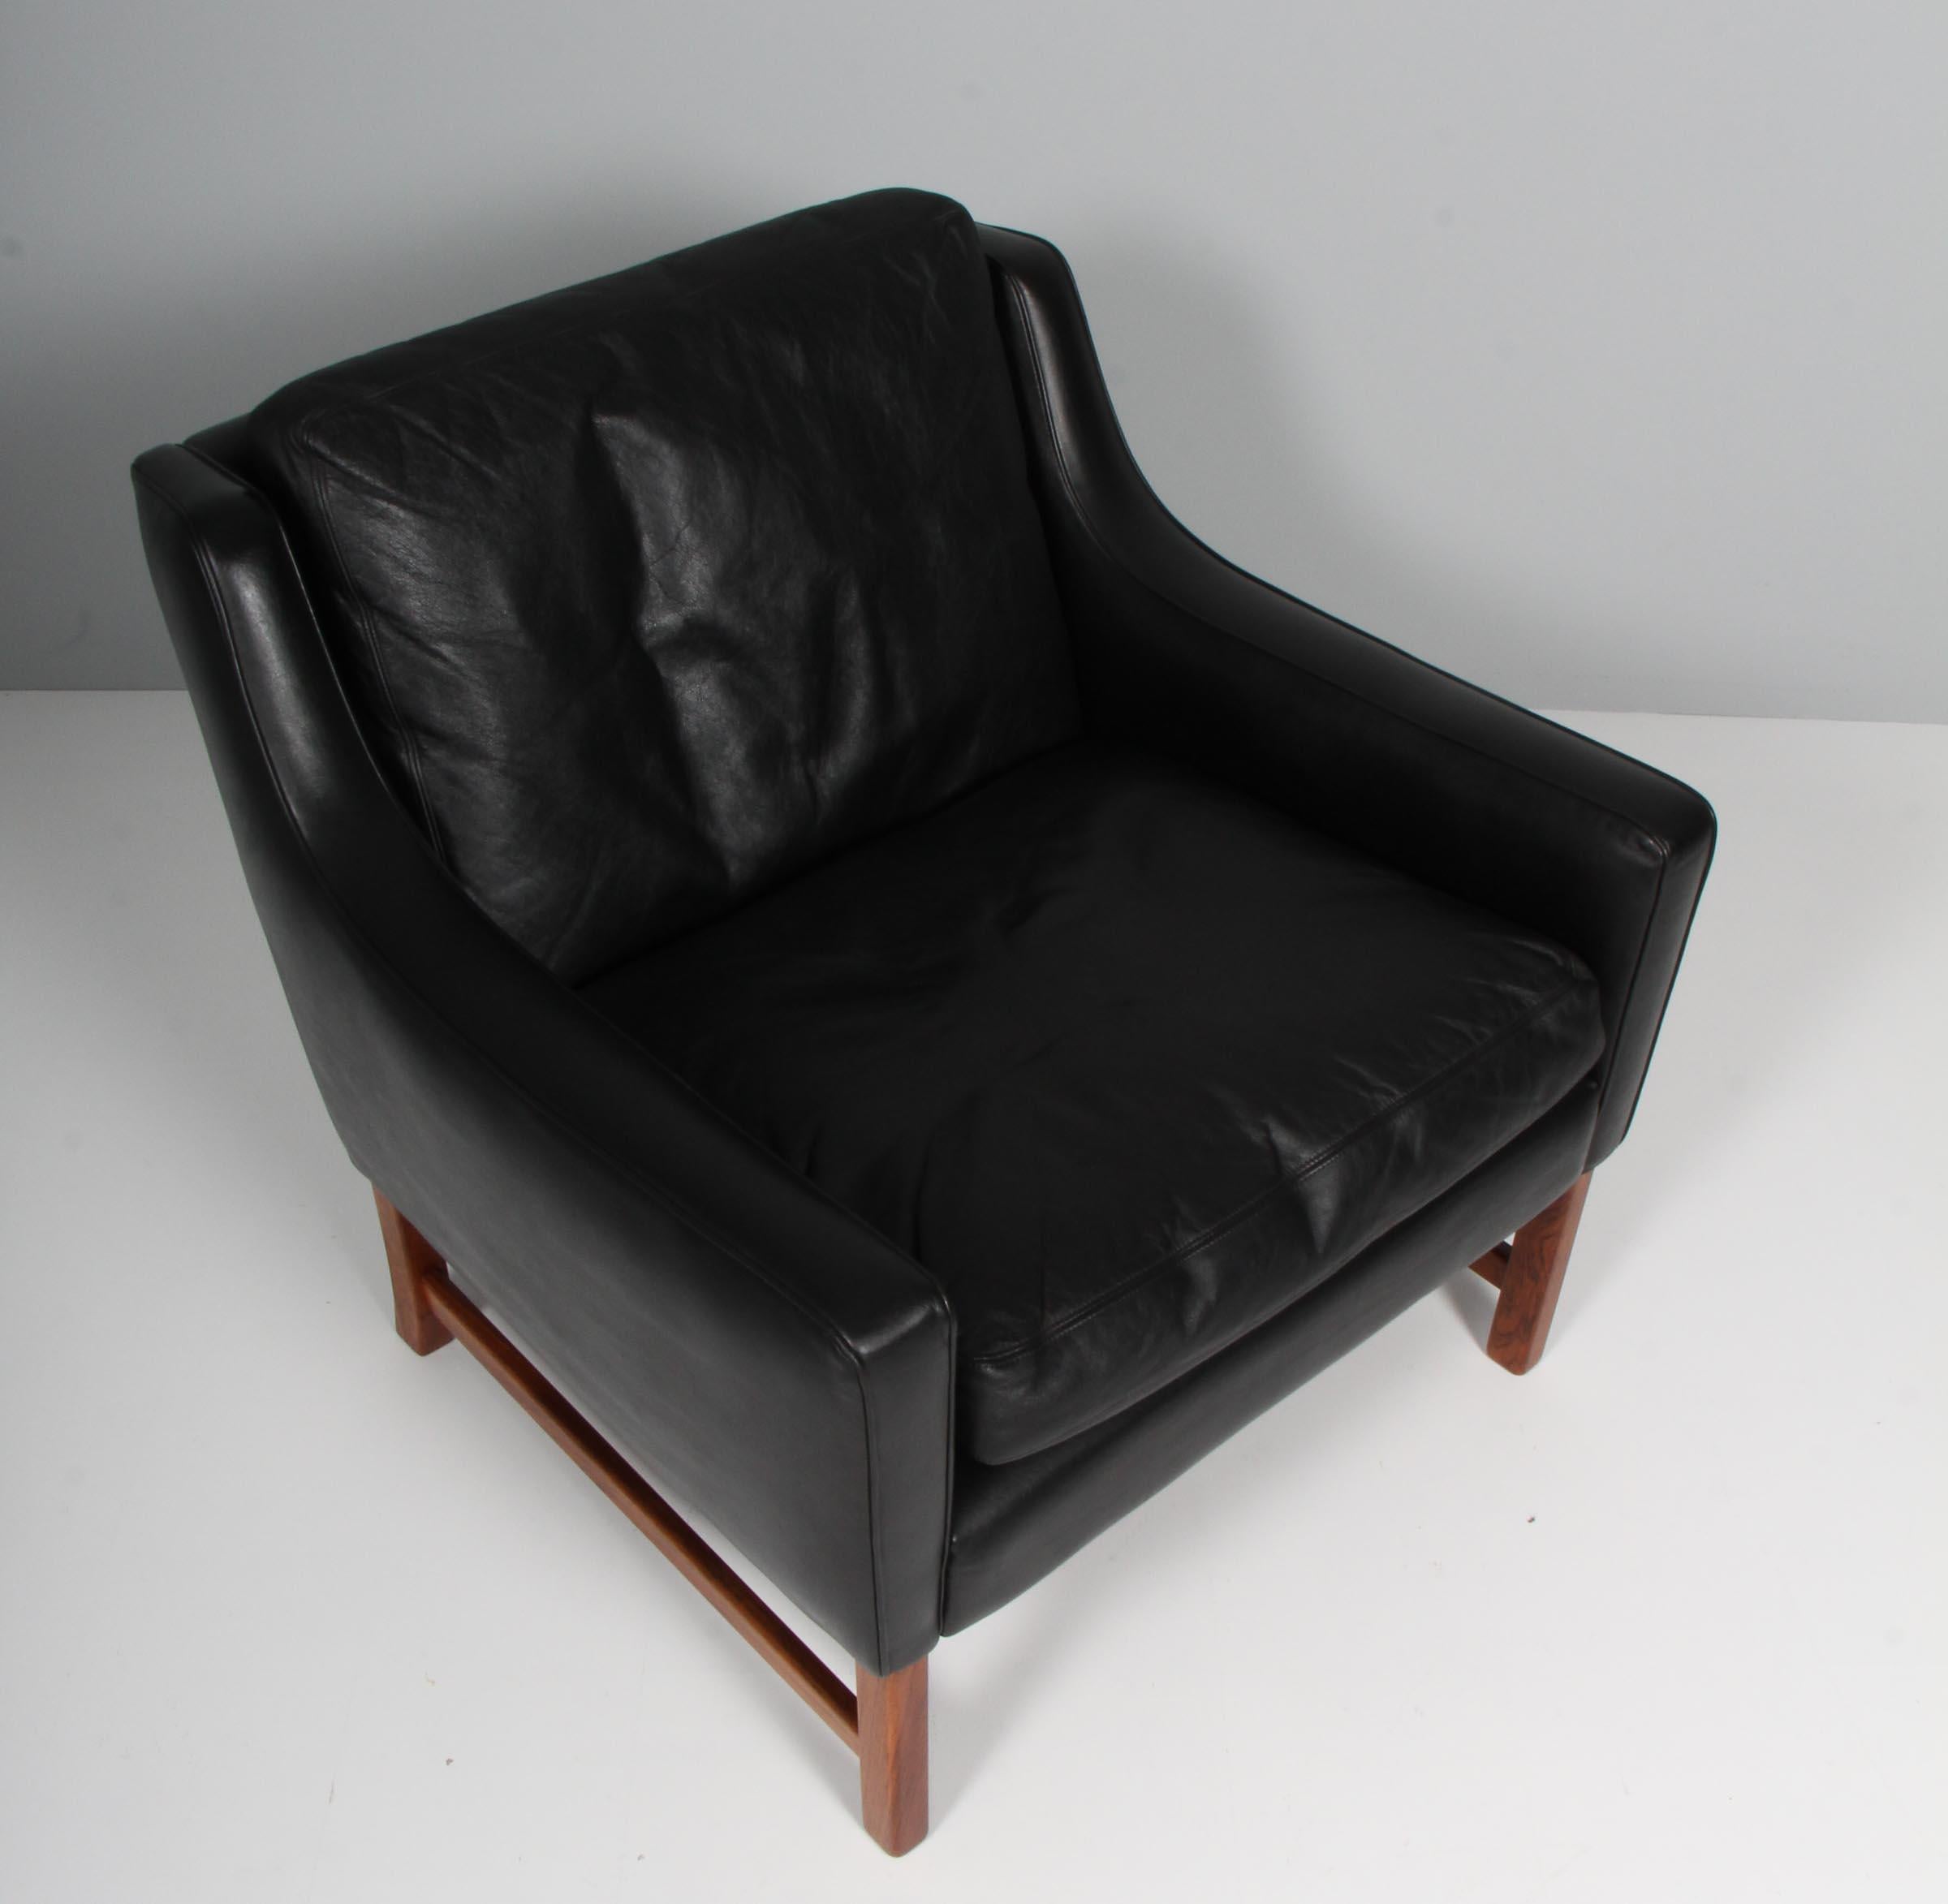 Fredrik Kayser lounge chair original upholstered with black leather.

Legs of rosewood.

Model 965, made by Vatne Møbelfabrik.